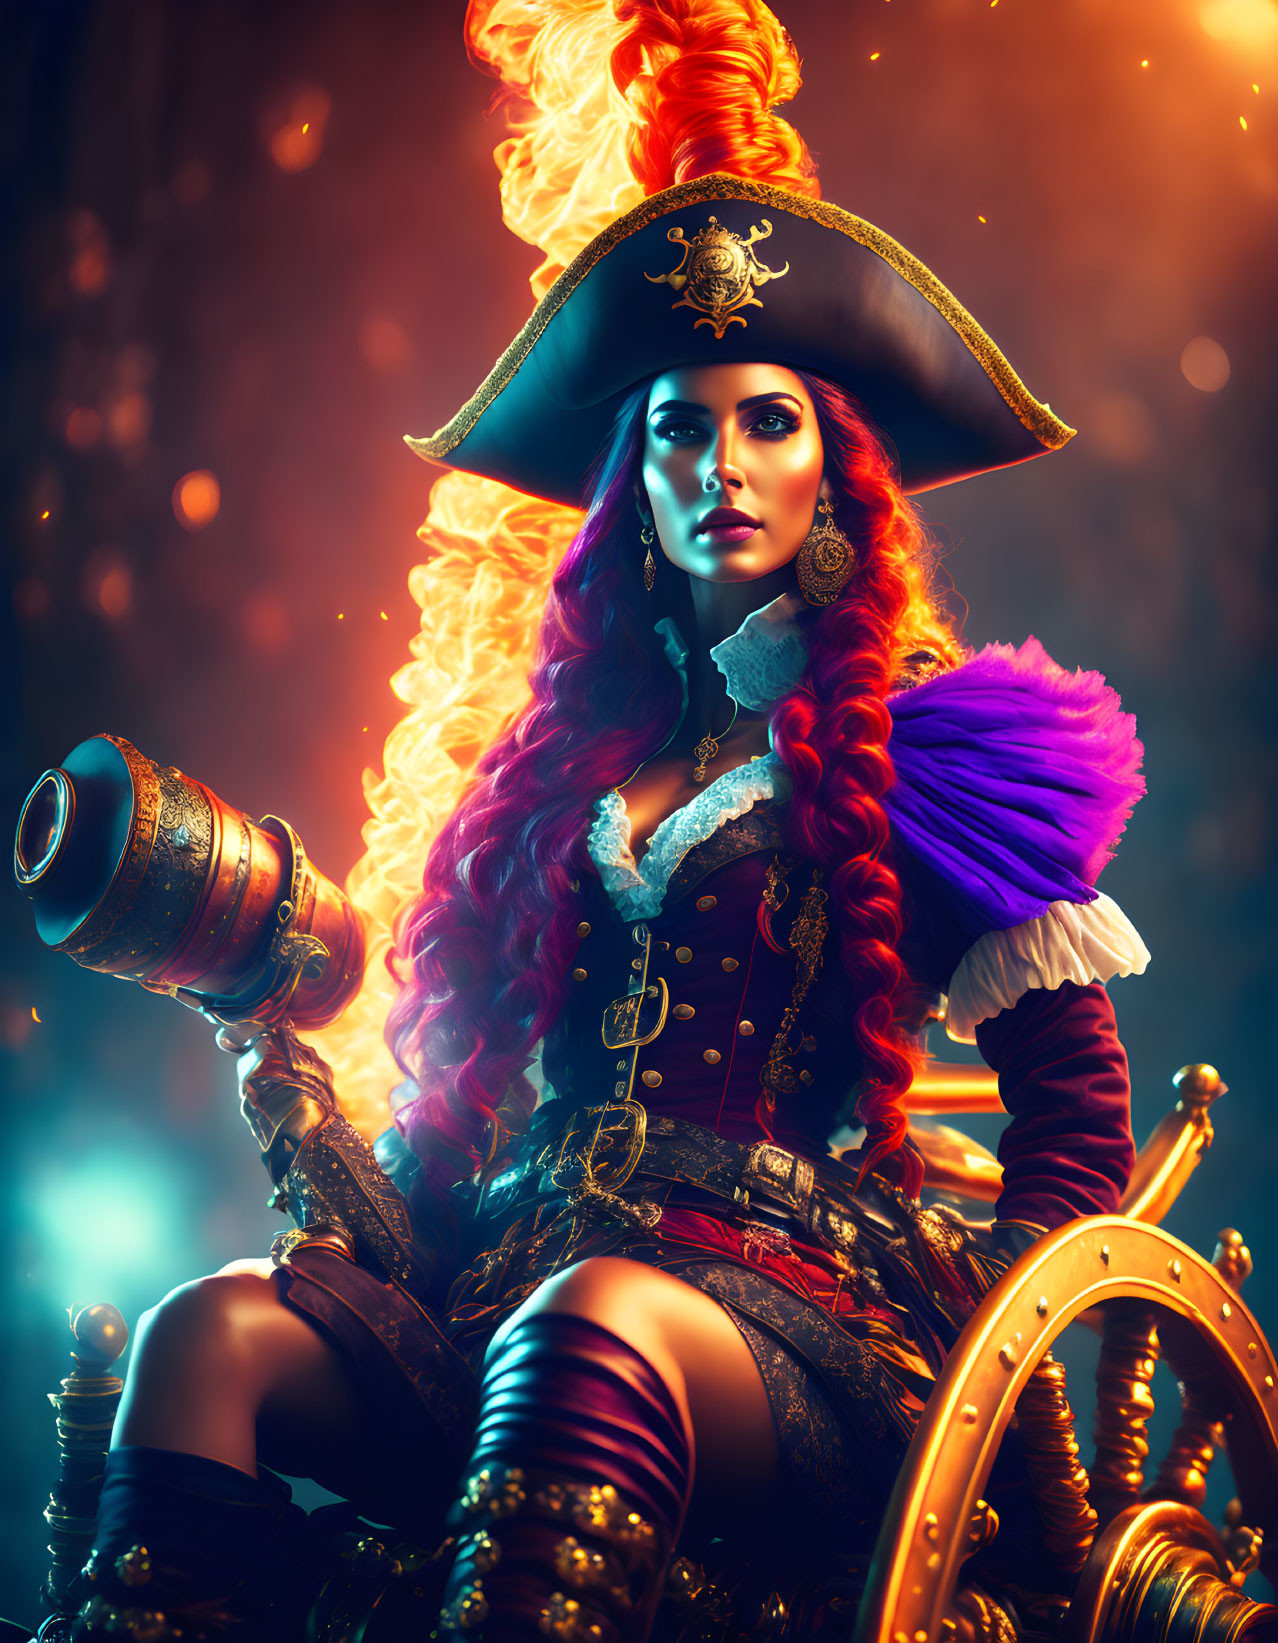 Pirate Queen 